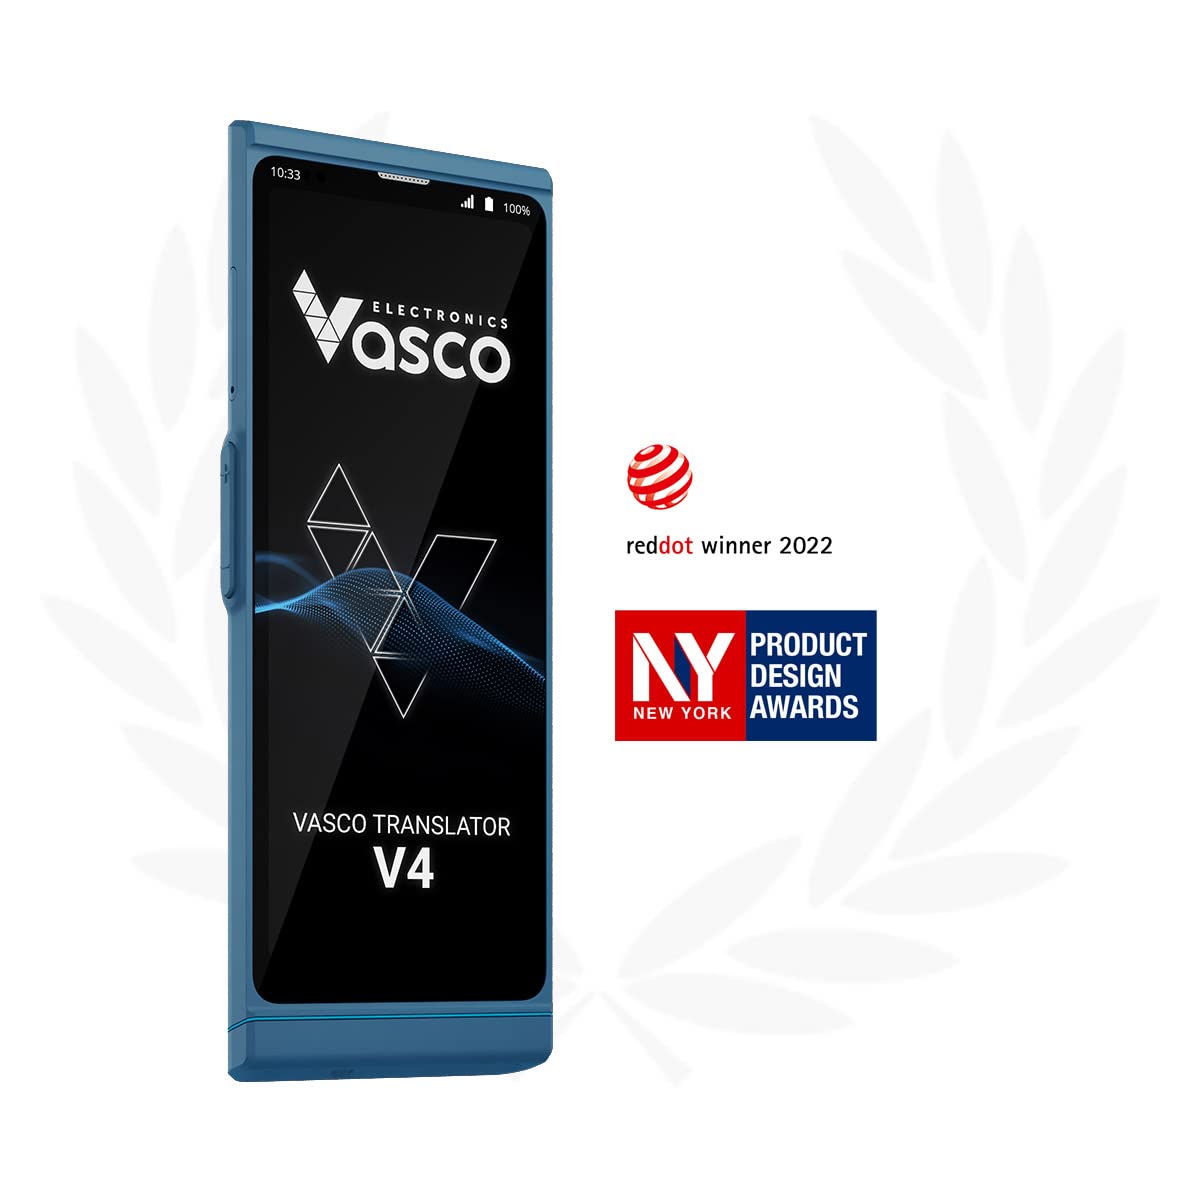 Vasco V4 Language Translator Device | 108 Languages | Free Lifetime Internet in Almost 200 Countries | Model 2022